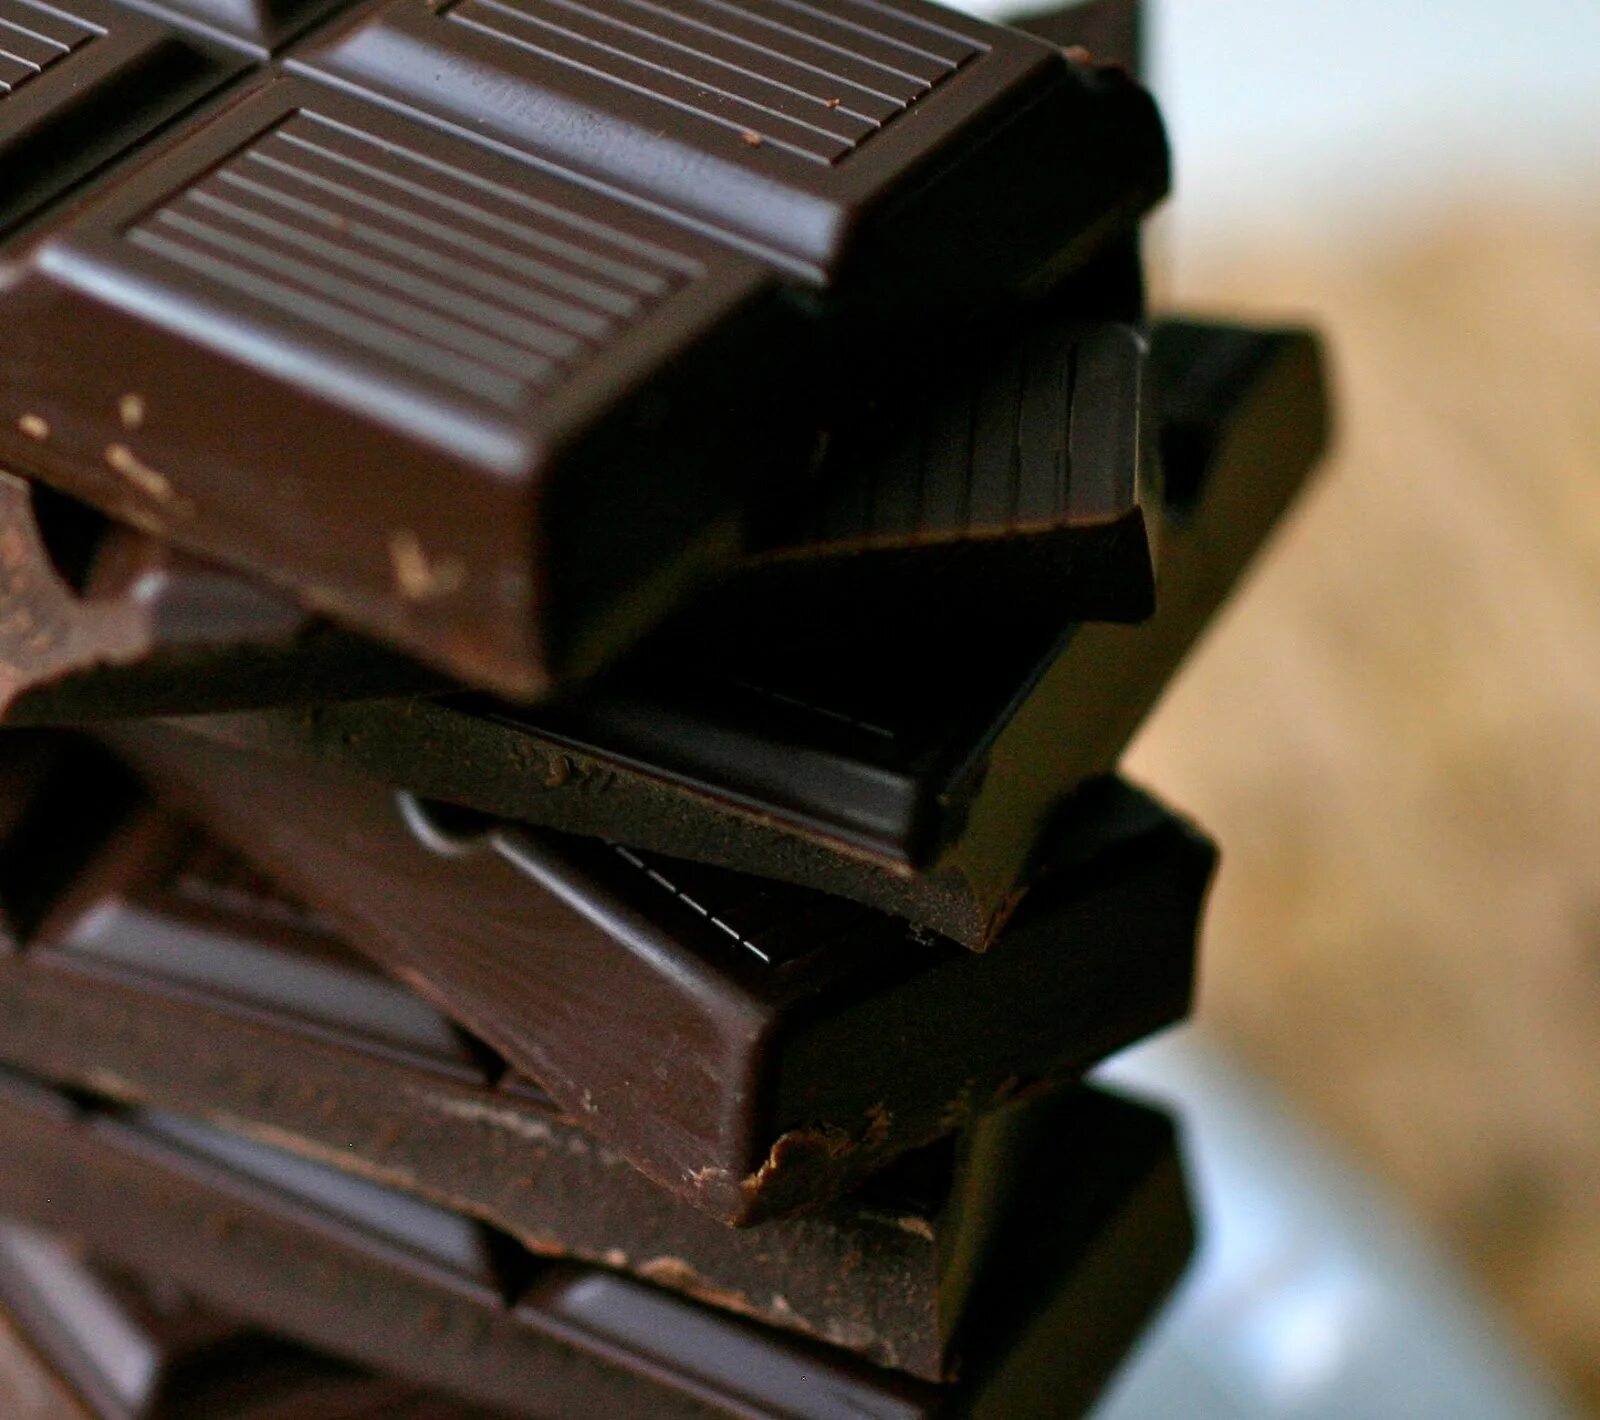 Шоколад п. "Горький шоколад" Barbara. Черный шоколад Тринити. Черный Горький шоколад. Шоколад Горький.